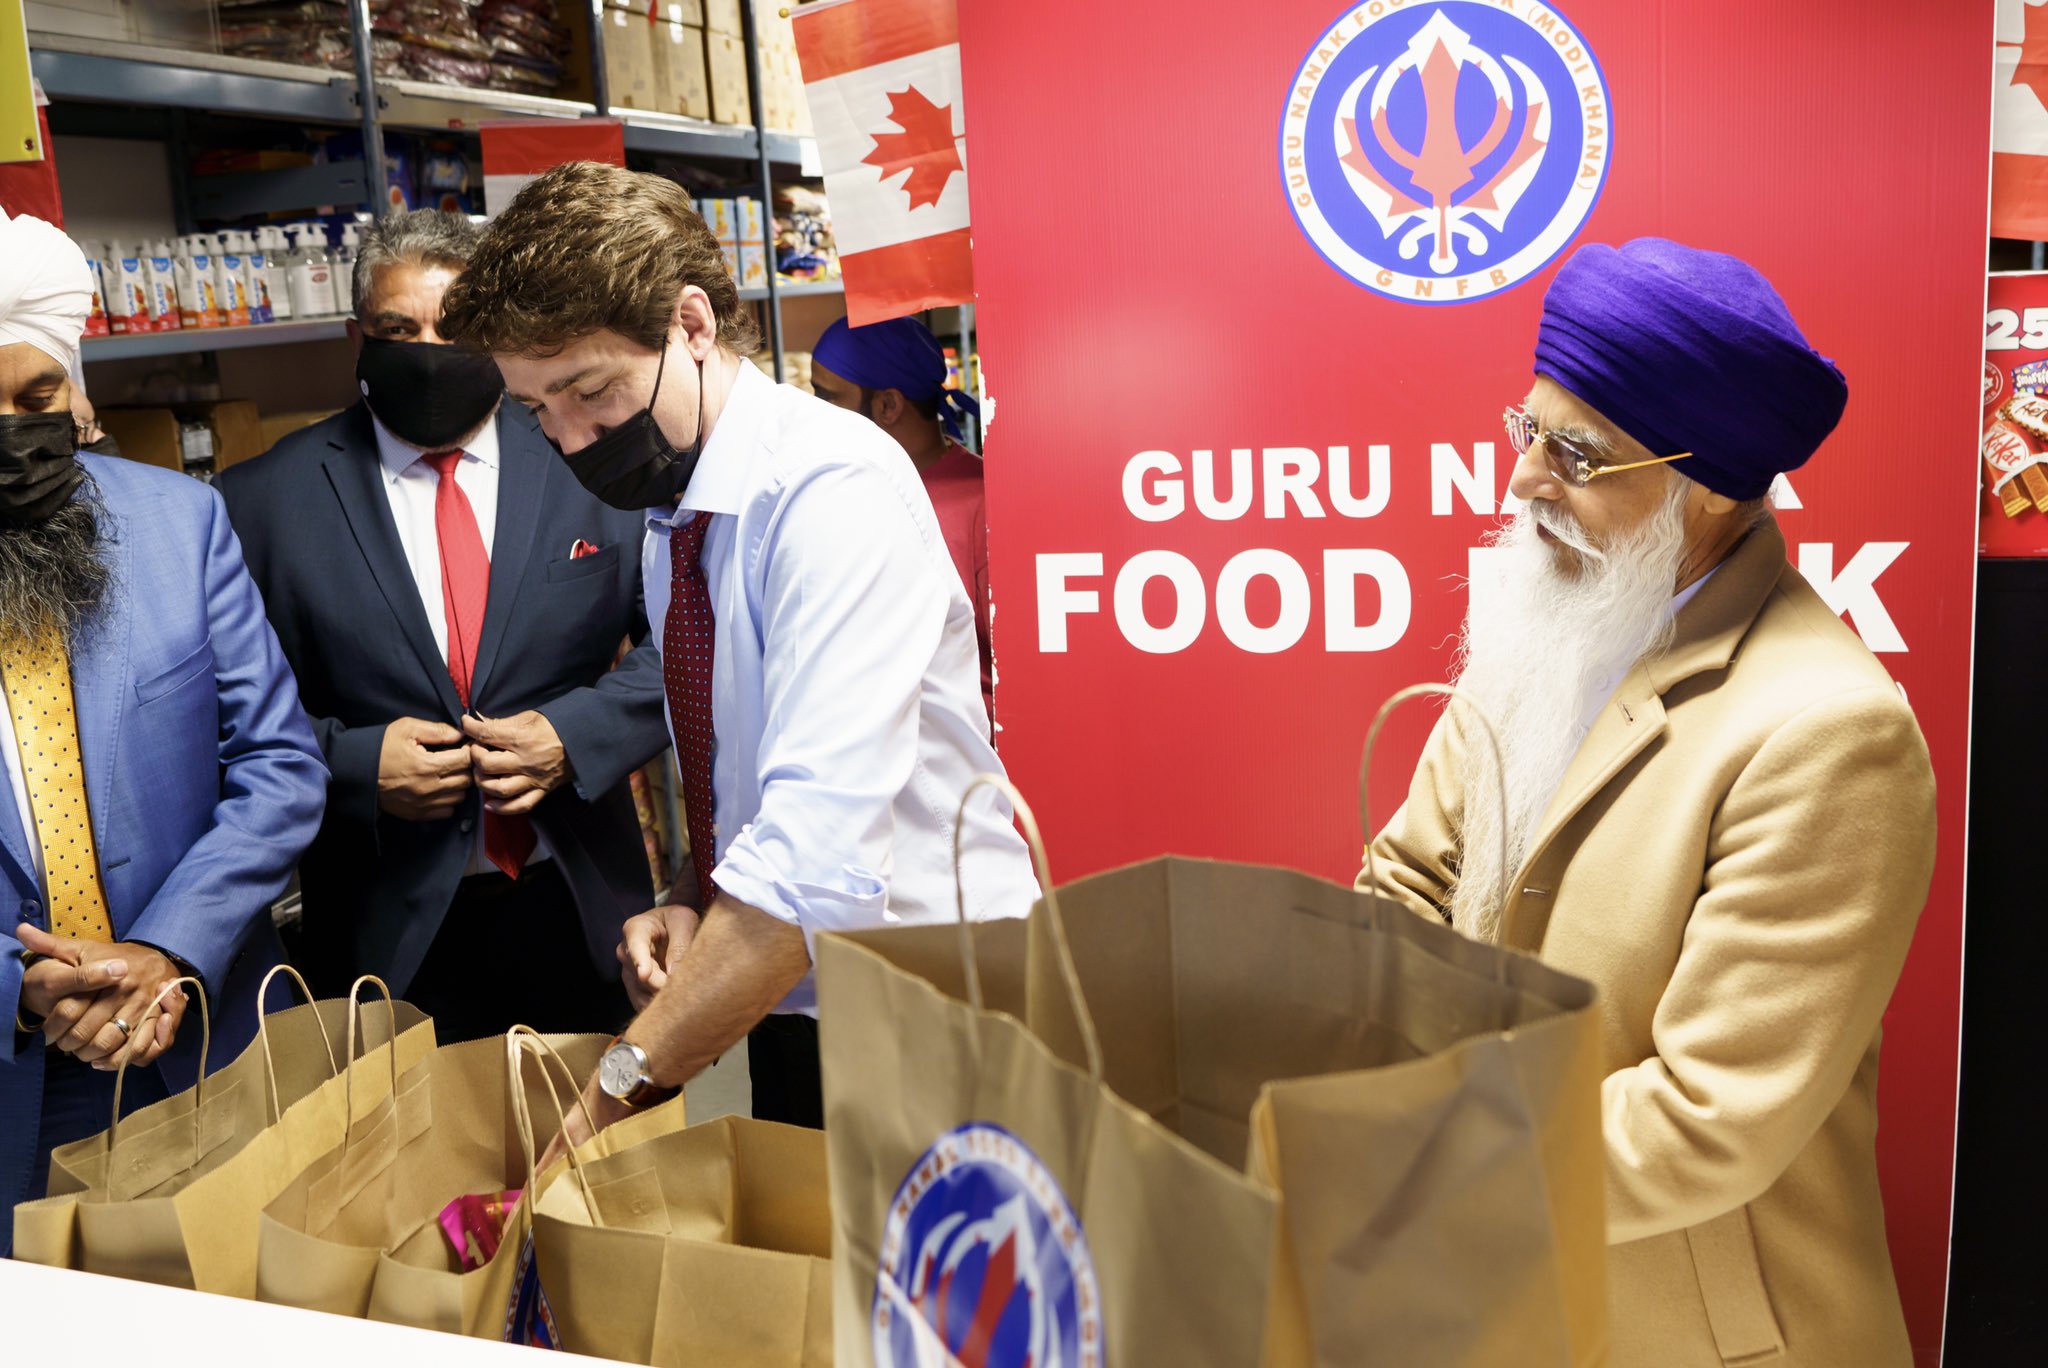 Canada PM Justin Trudeau lends a hand at Surrey's Guru Nanak Food Bank; extends gratitude to volunteers